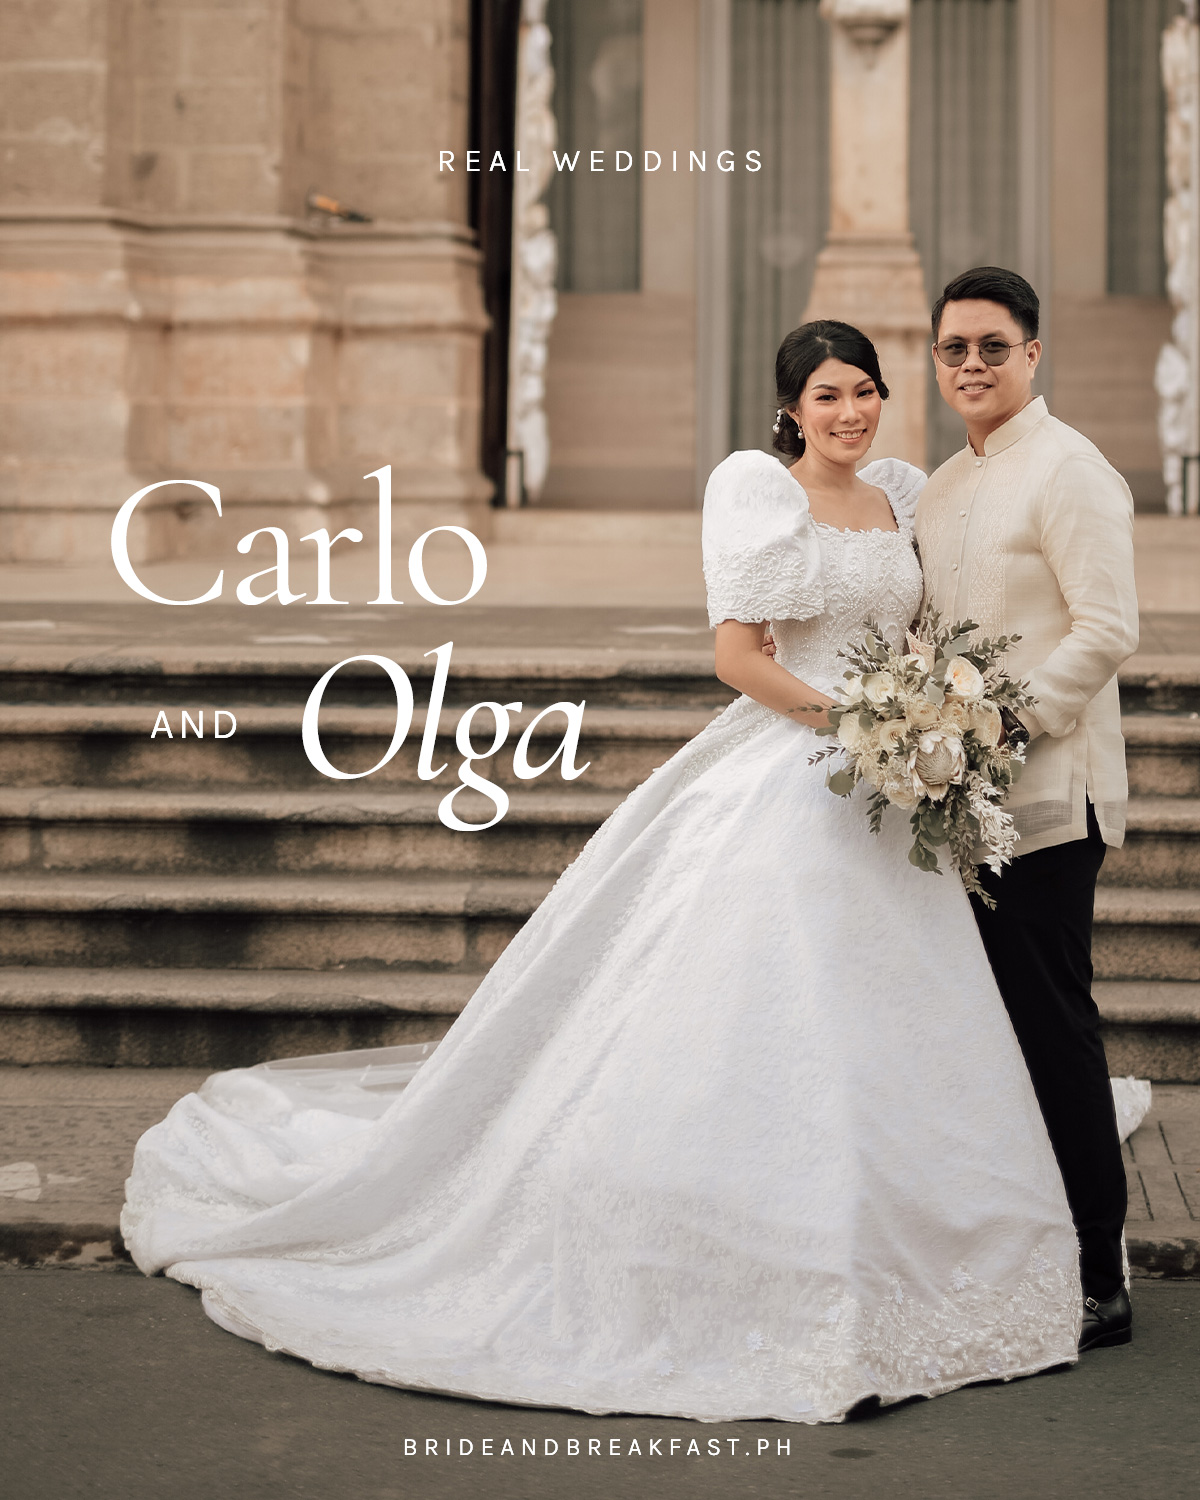 Carlo and Olga